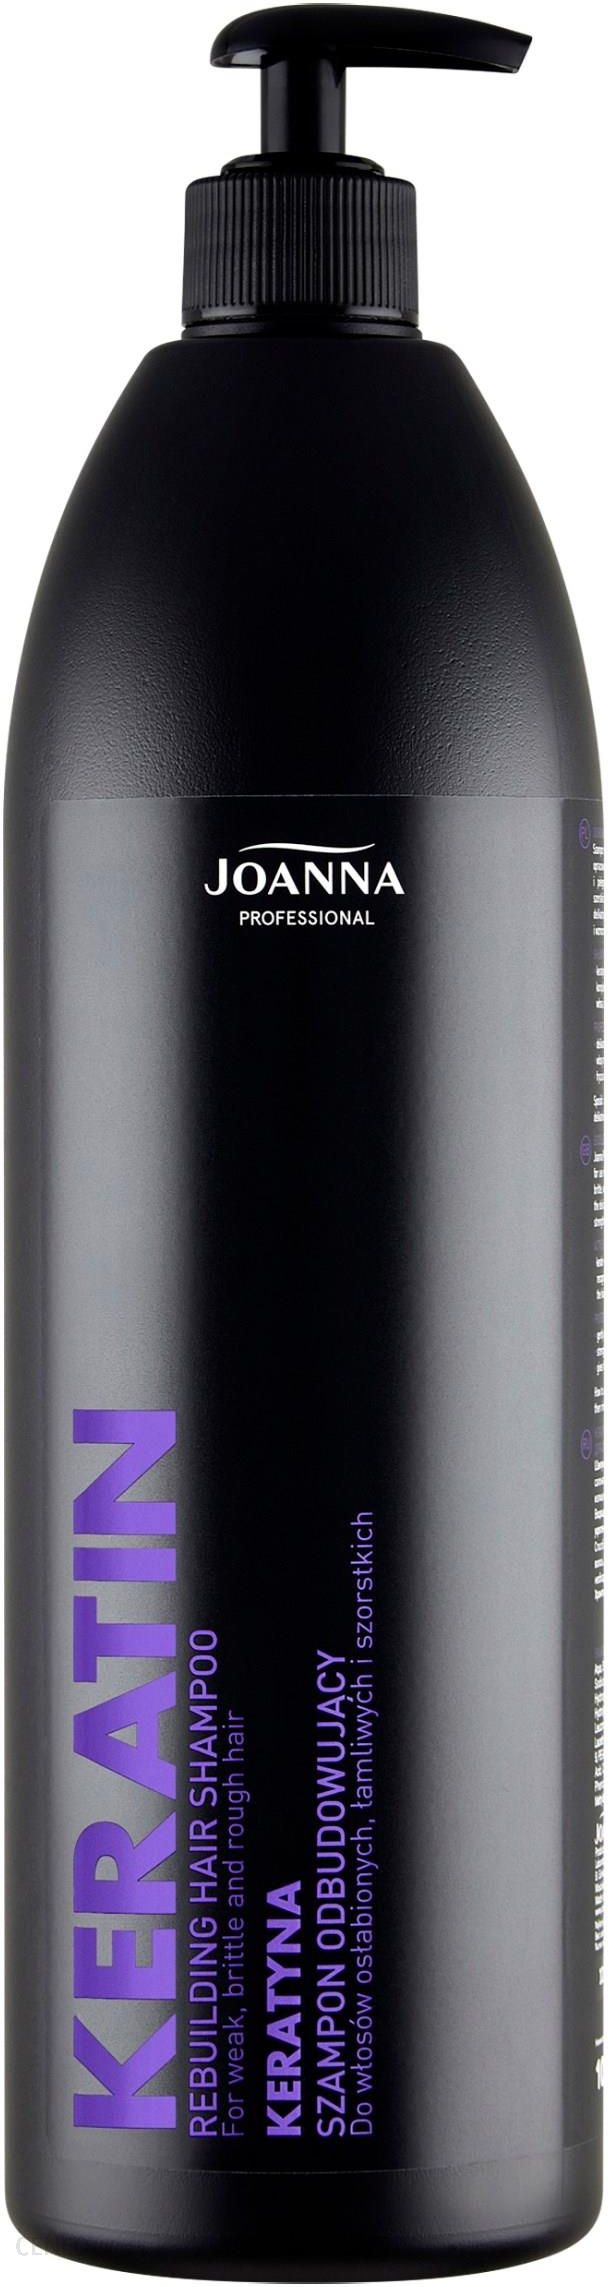 joanna szampon professional